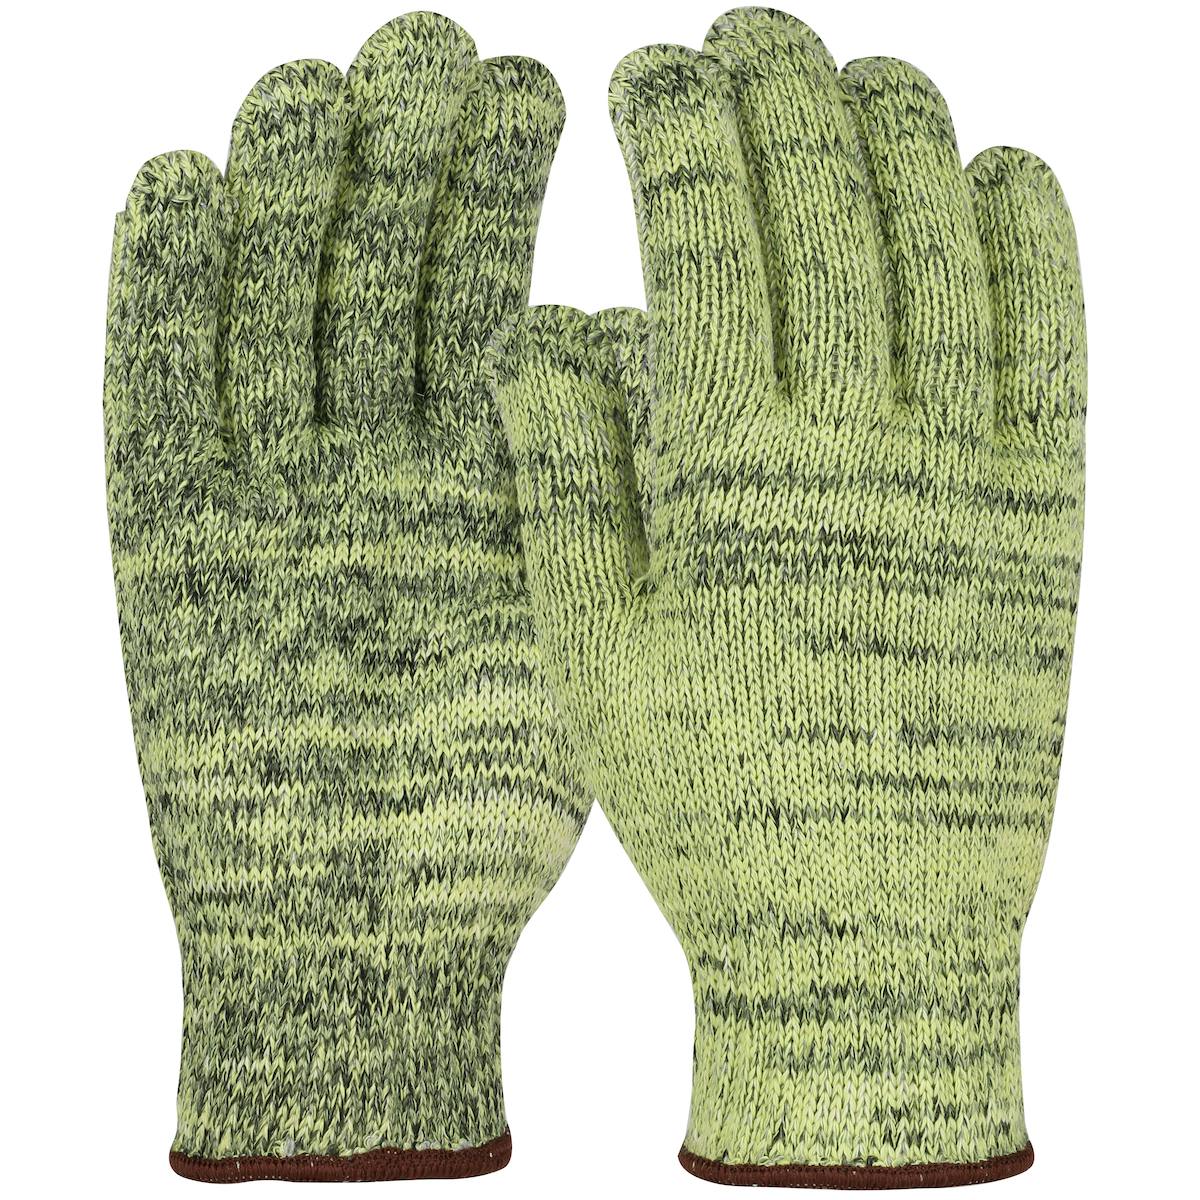 Kut Gard® Seamless Knit ATA® Hide-Away™ / Aramid Blended Glove with Cotton/Polyester Plating - Heavy Weight (MATA503HA)